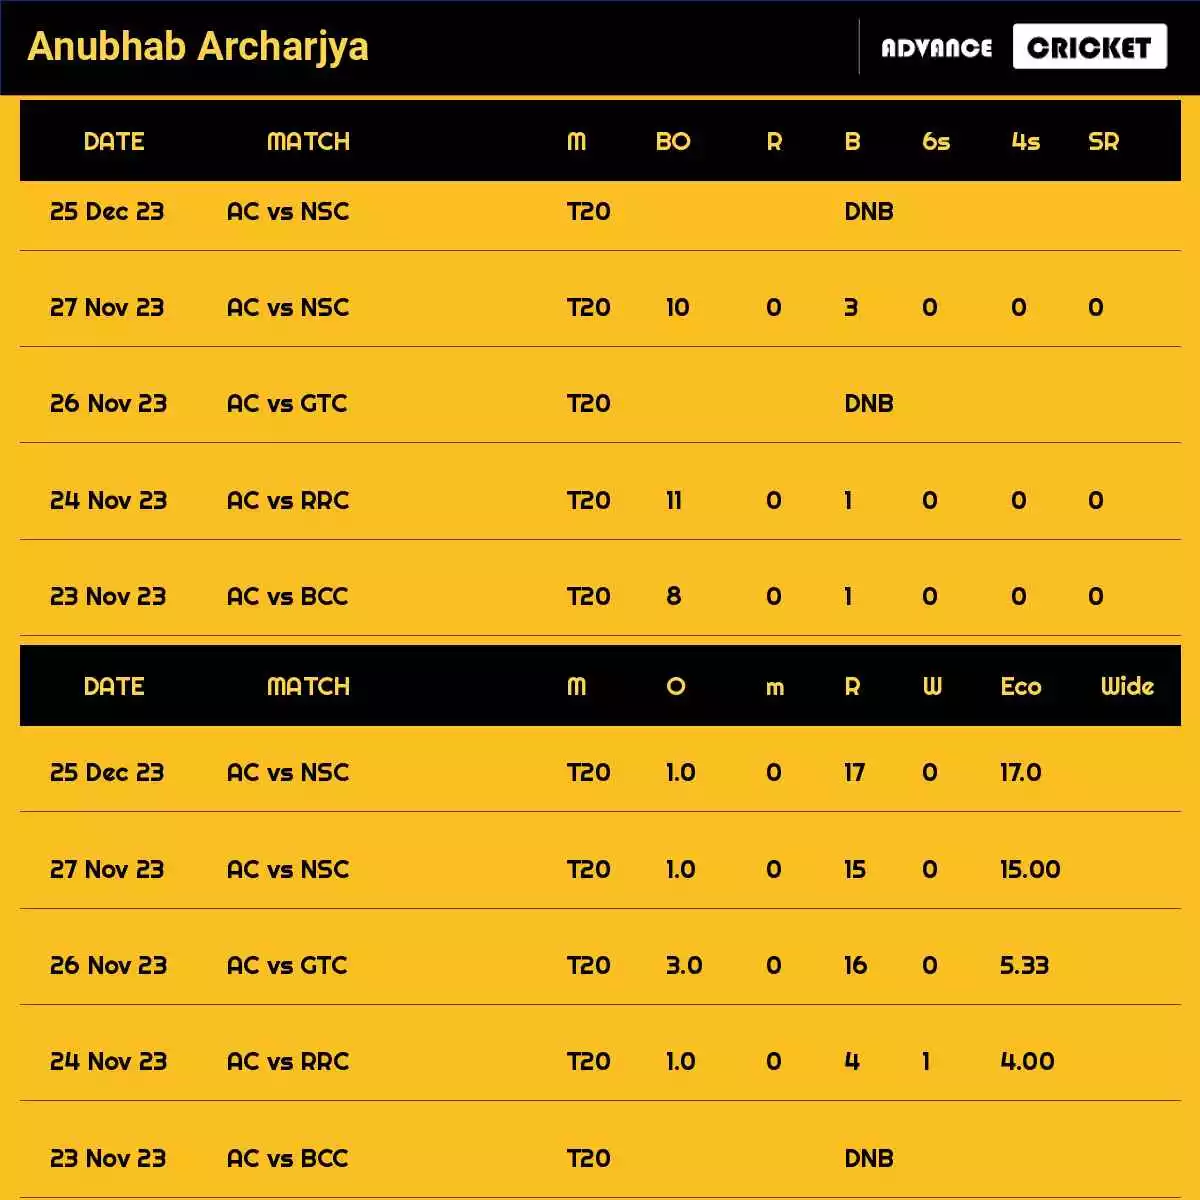 Anubhab Archarjya Recent Matches Details Date Wise